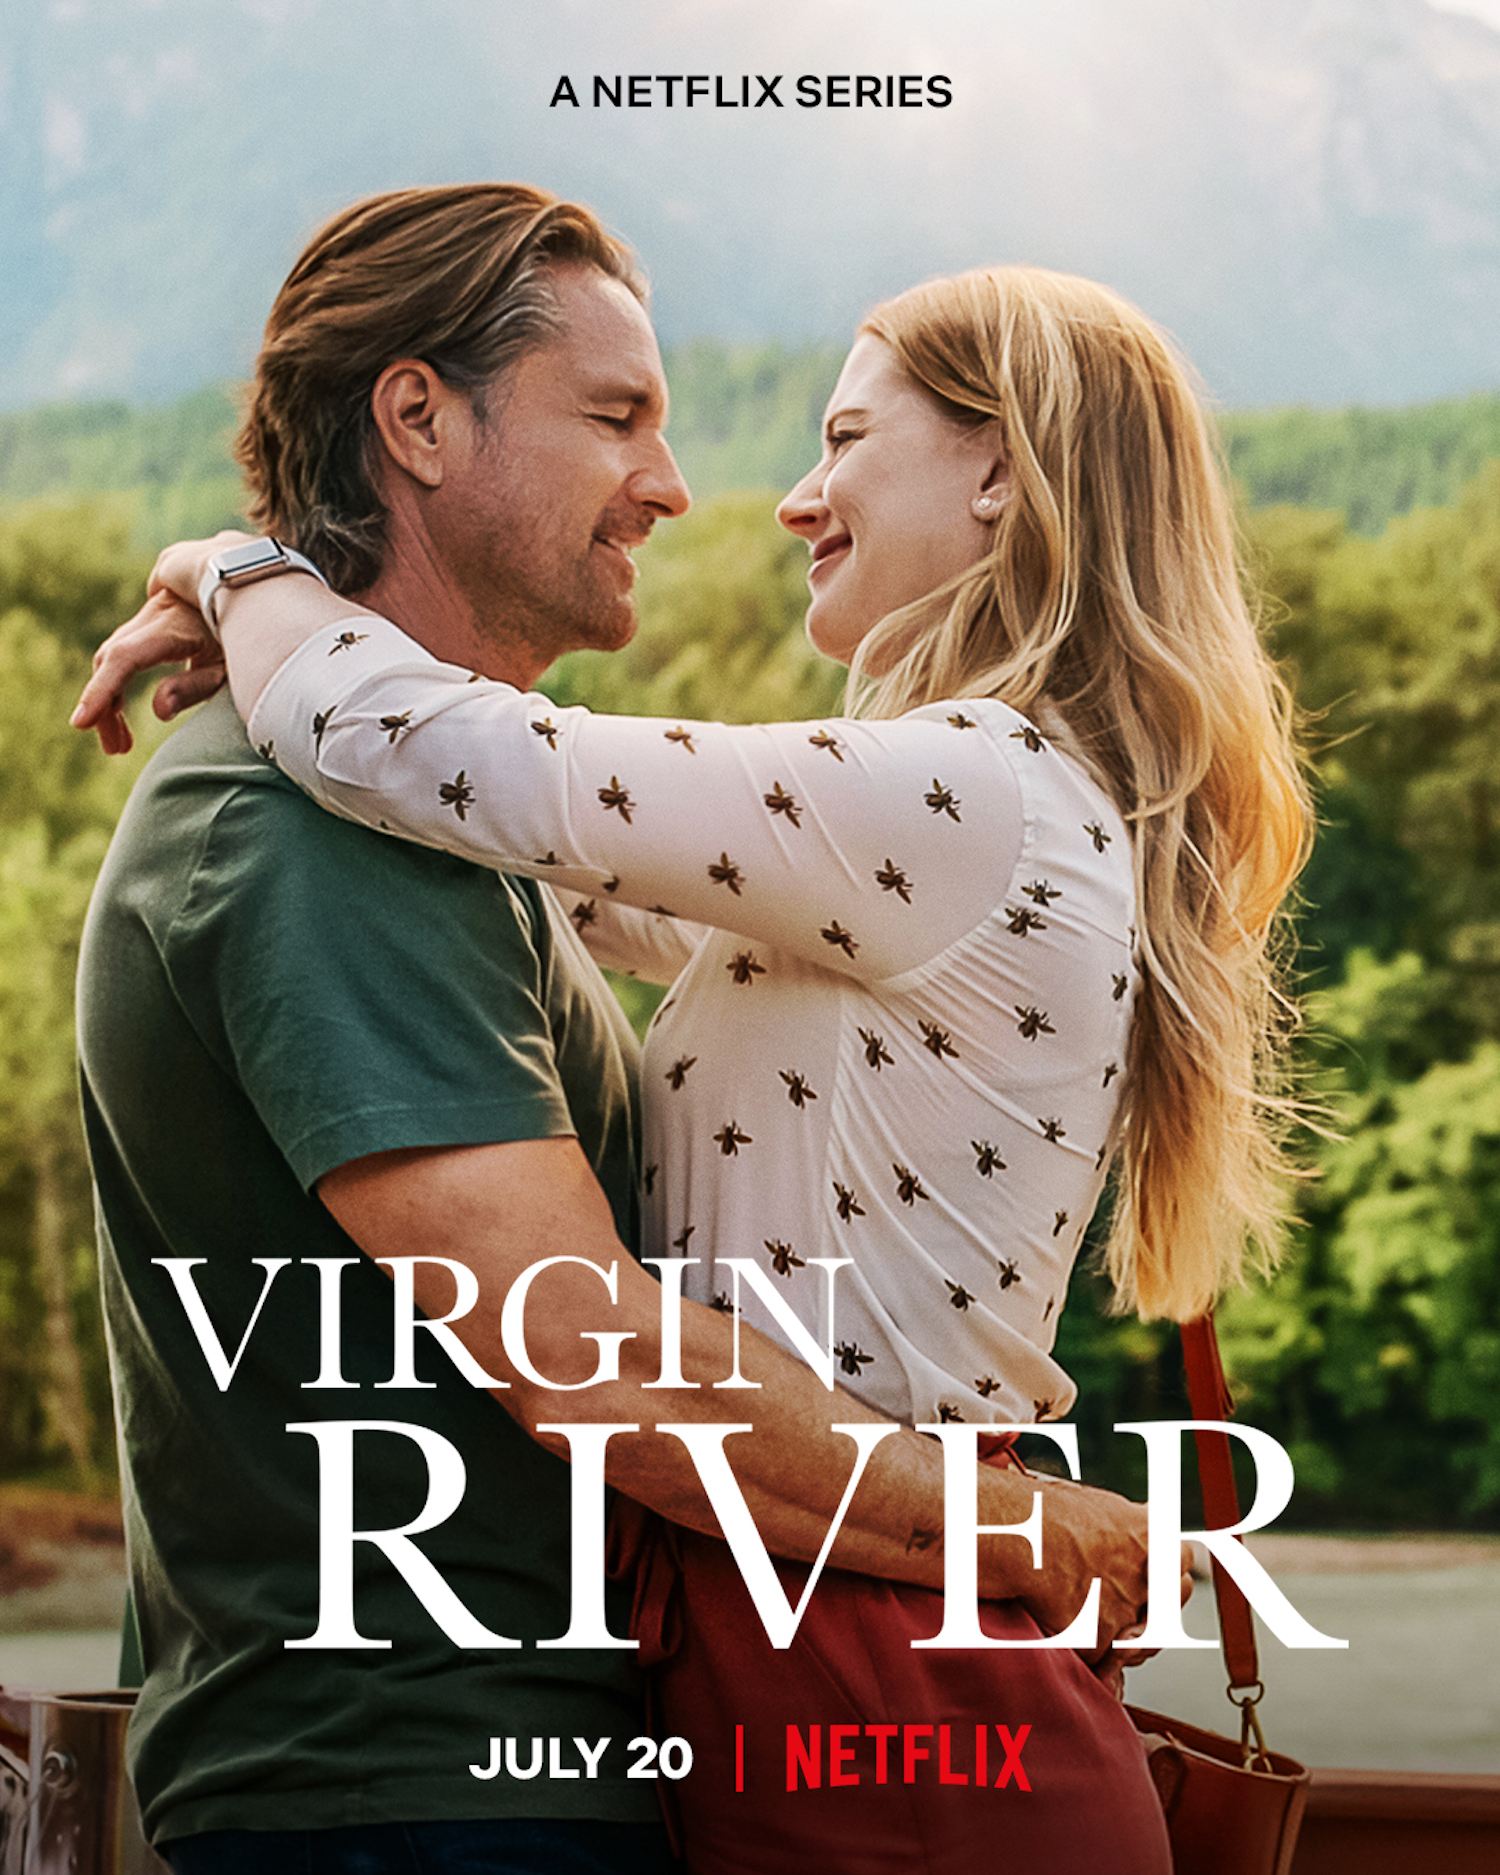 Virgin River Season 4 Parents Guide